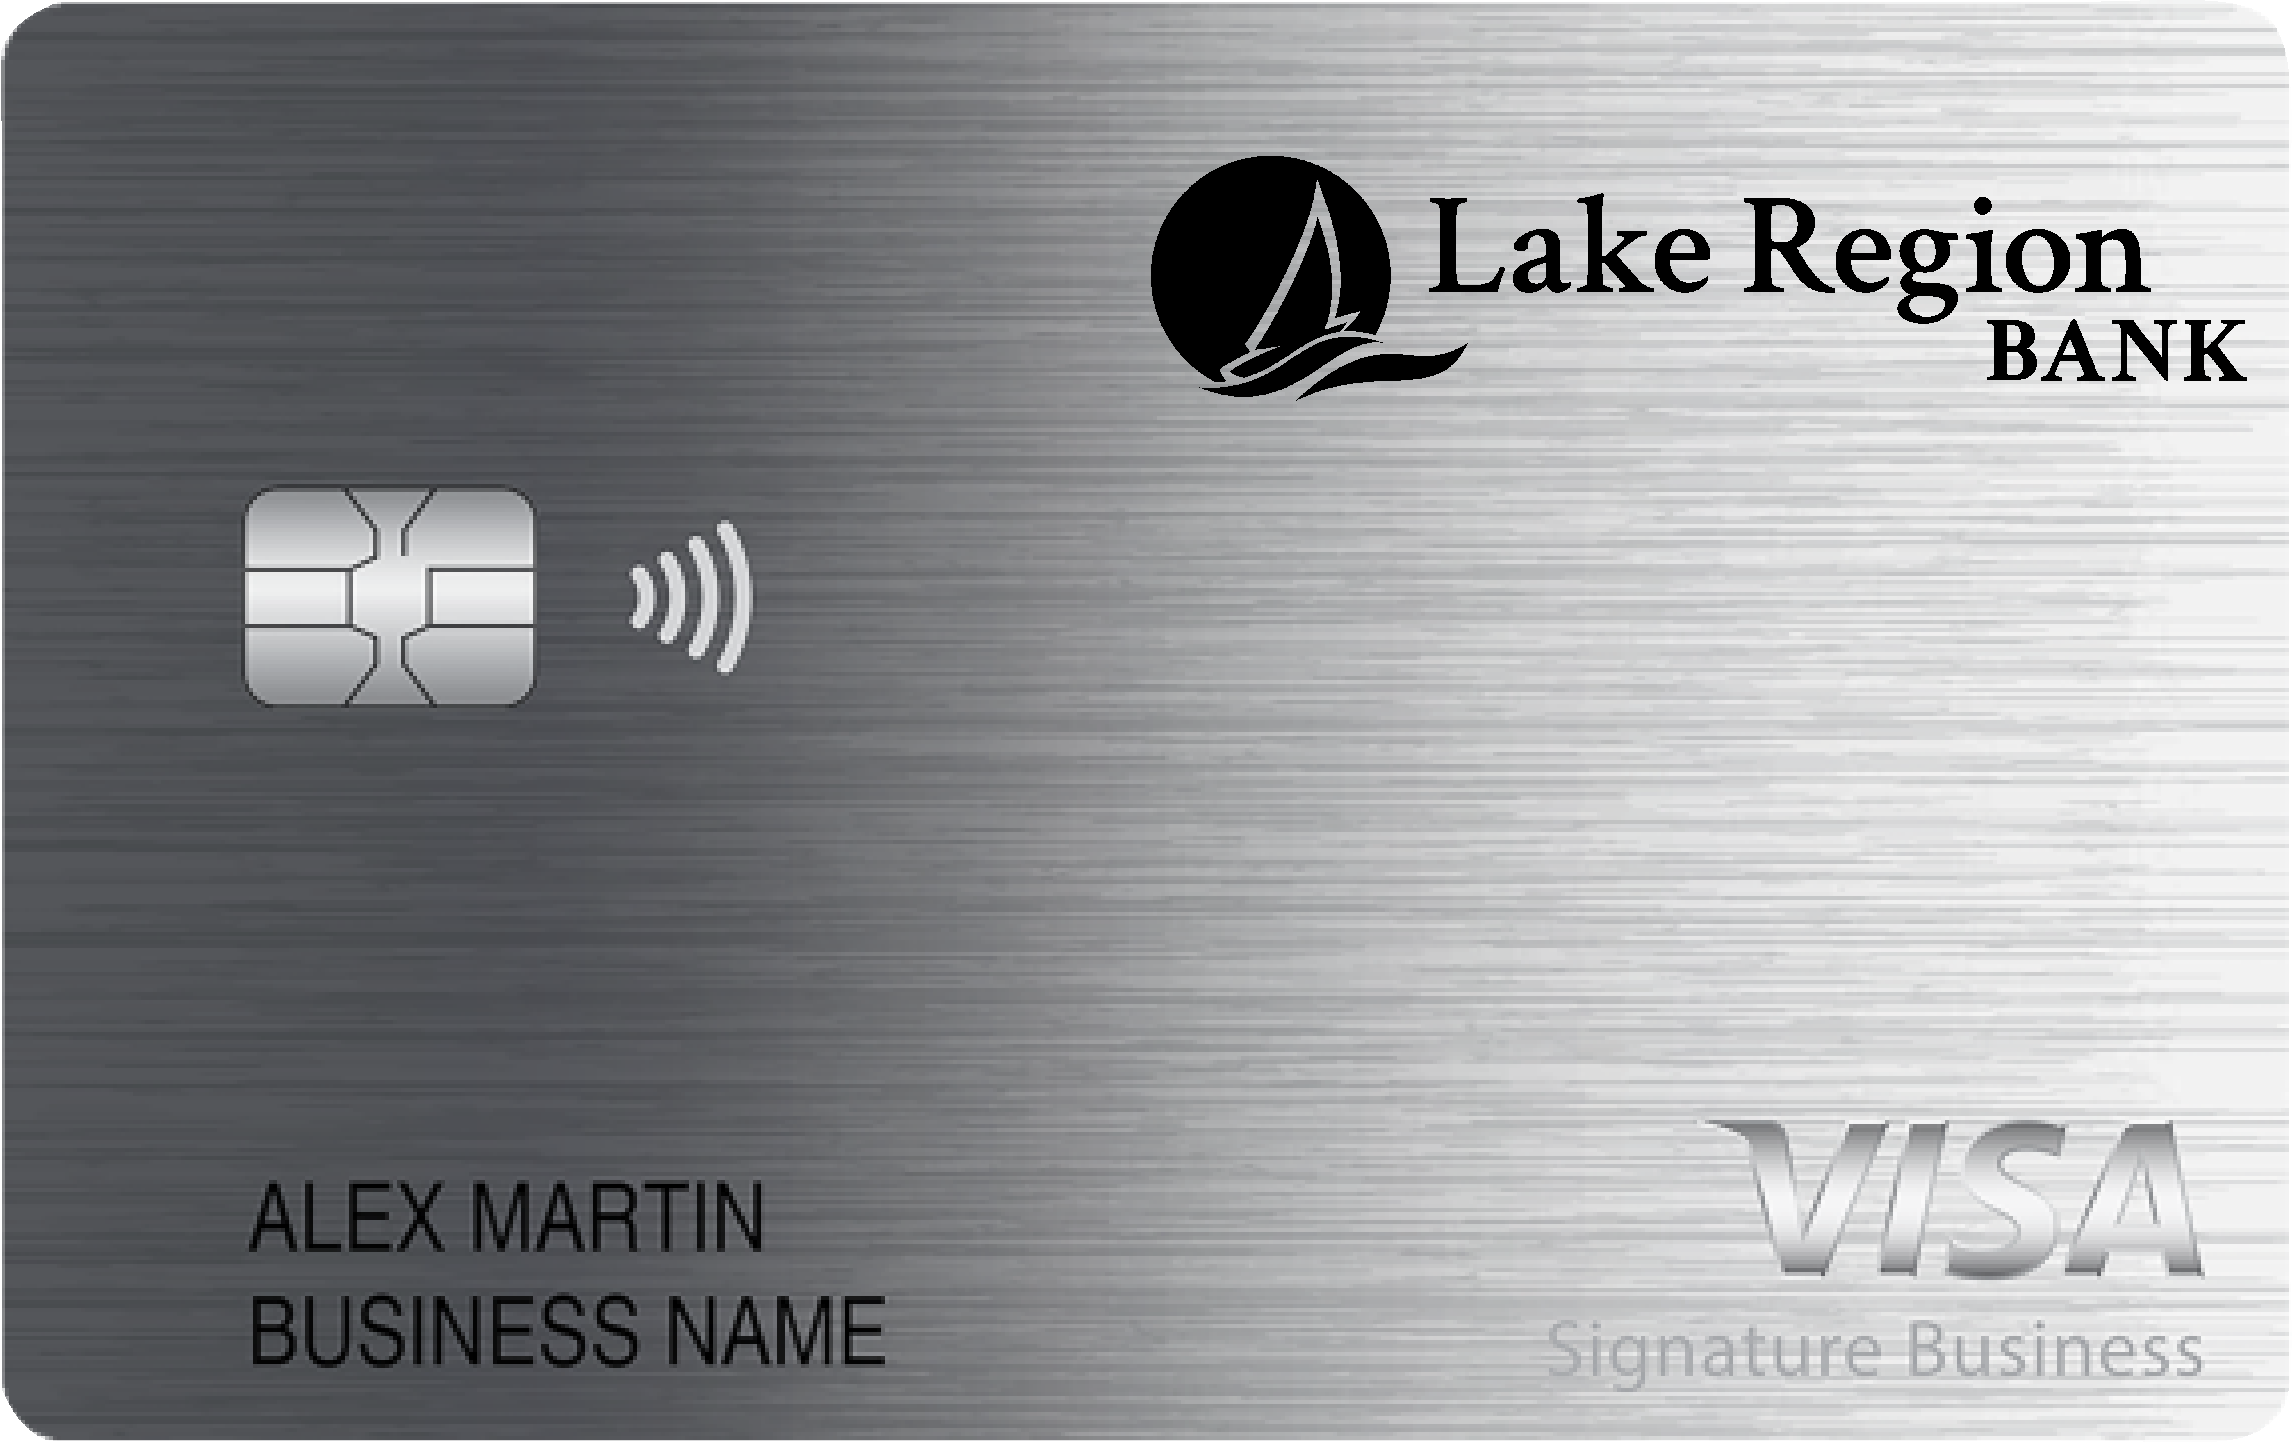 Lake Region Bank Smart Business Rewards Card